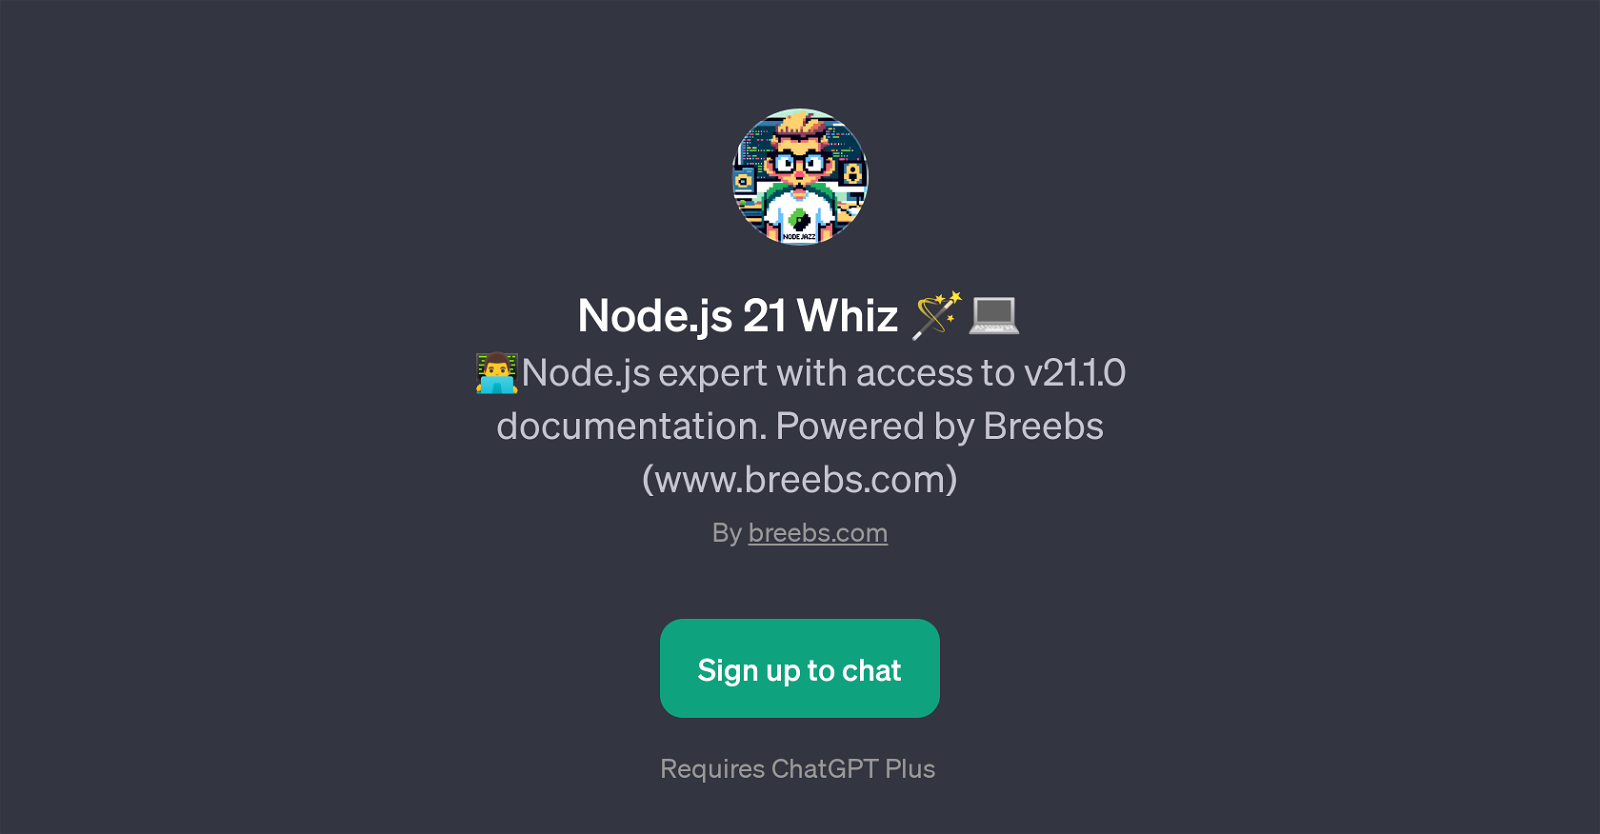 Node.js 21 Whiz website